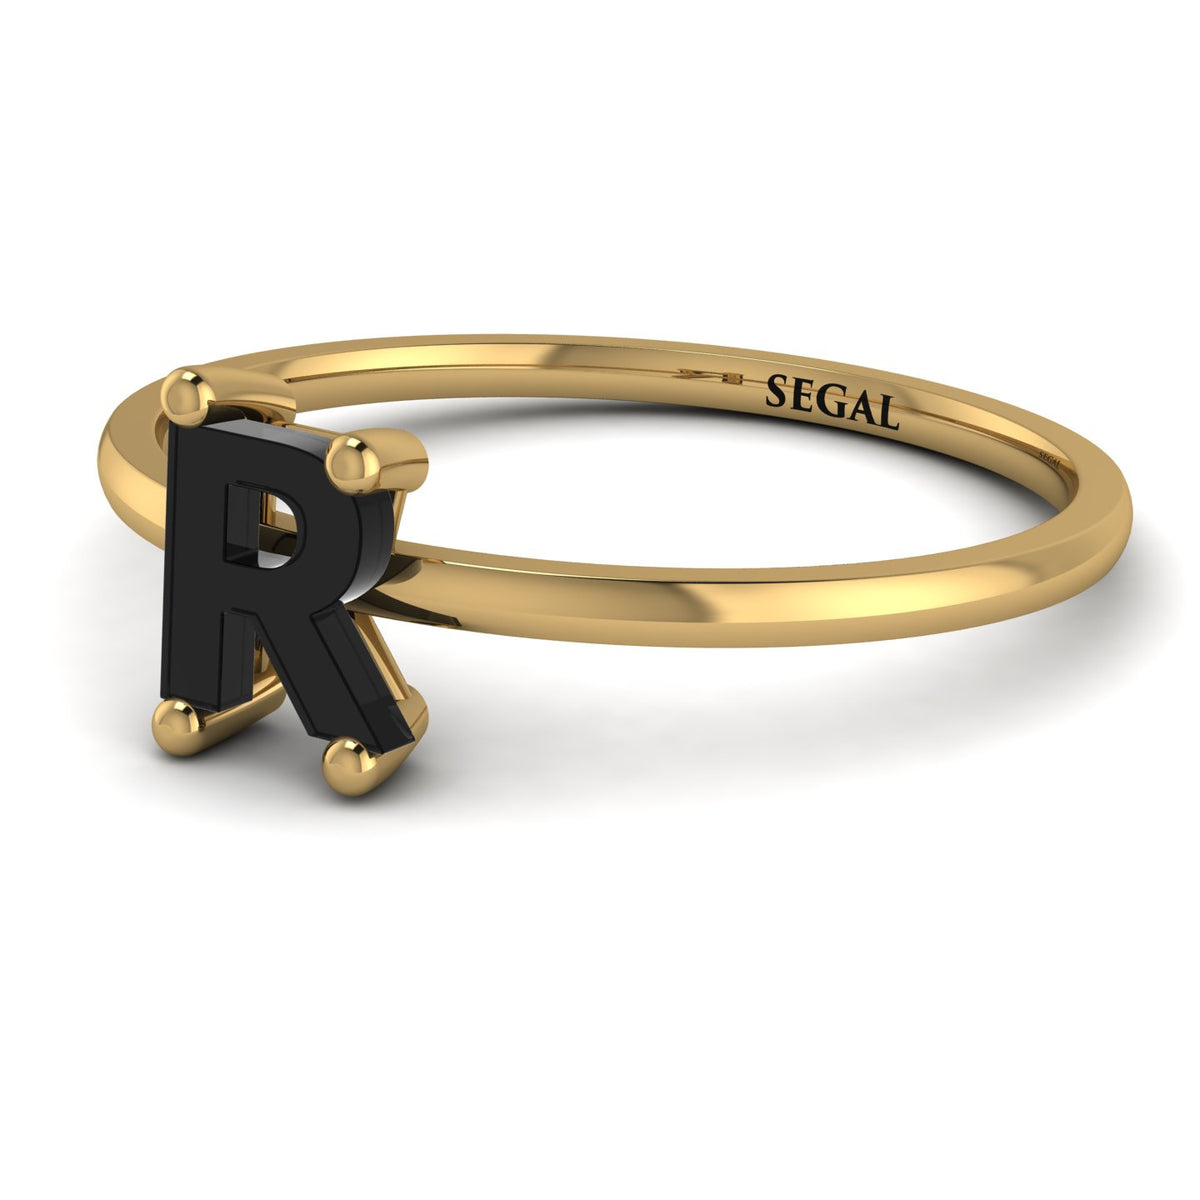 Gold jawellery desings | R Name की gold ring | अपने नाम के अक्षर की रिंग  बनवाए 6gm gold - YouTube